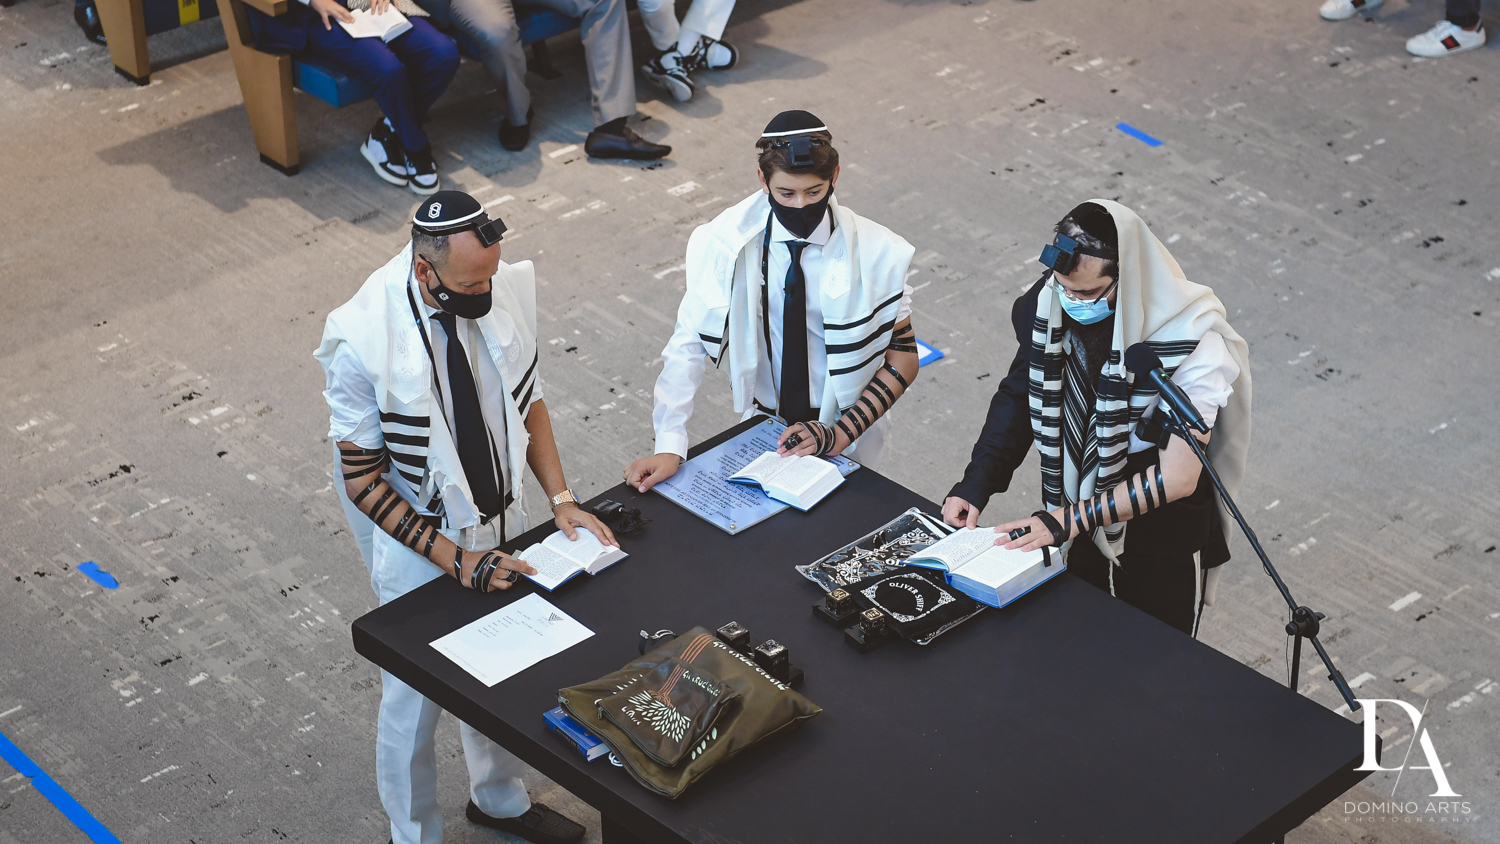 COVID Bar Mitzvah Ceremony at Aventura Chabad by Domino Arts Photography